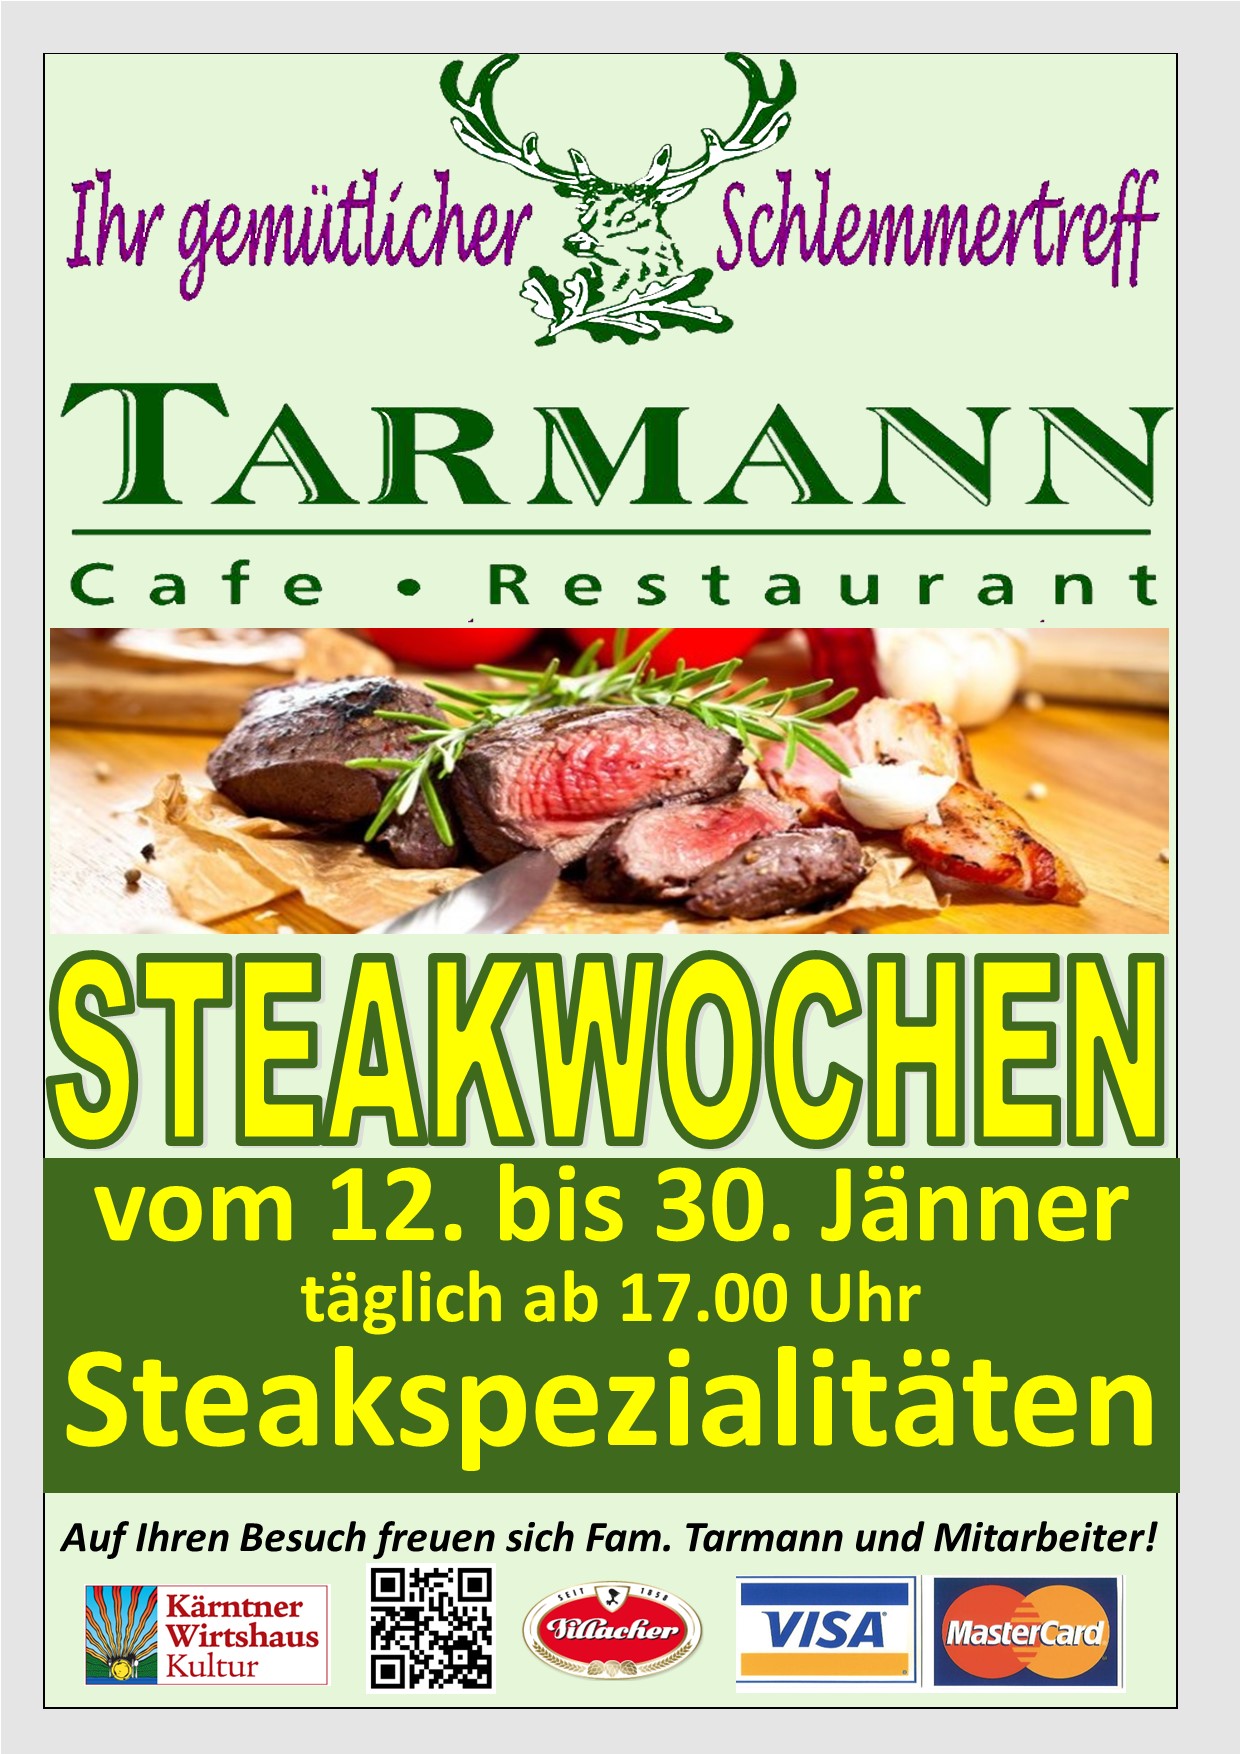 Steakwochen Cafe & Restaurant Tarmann © 